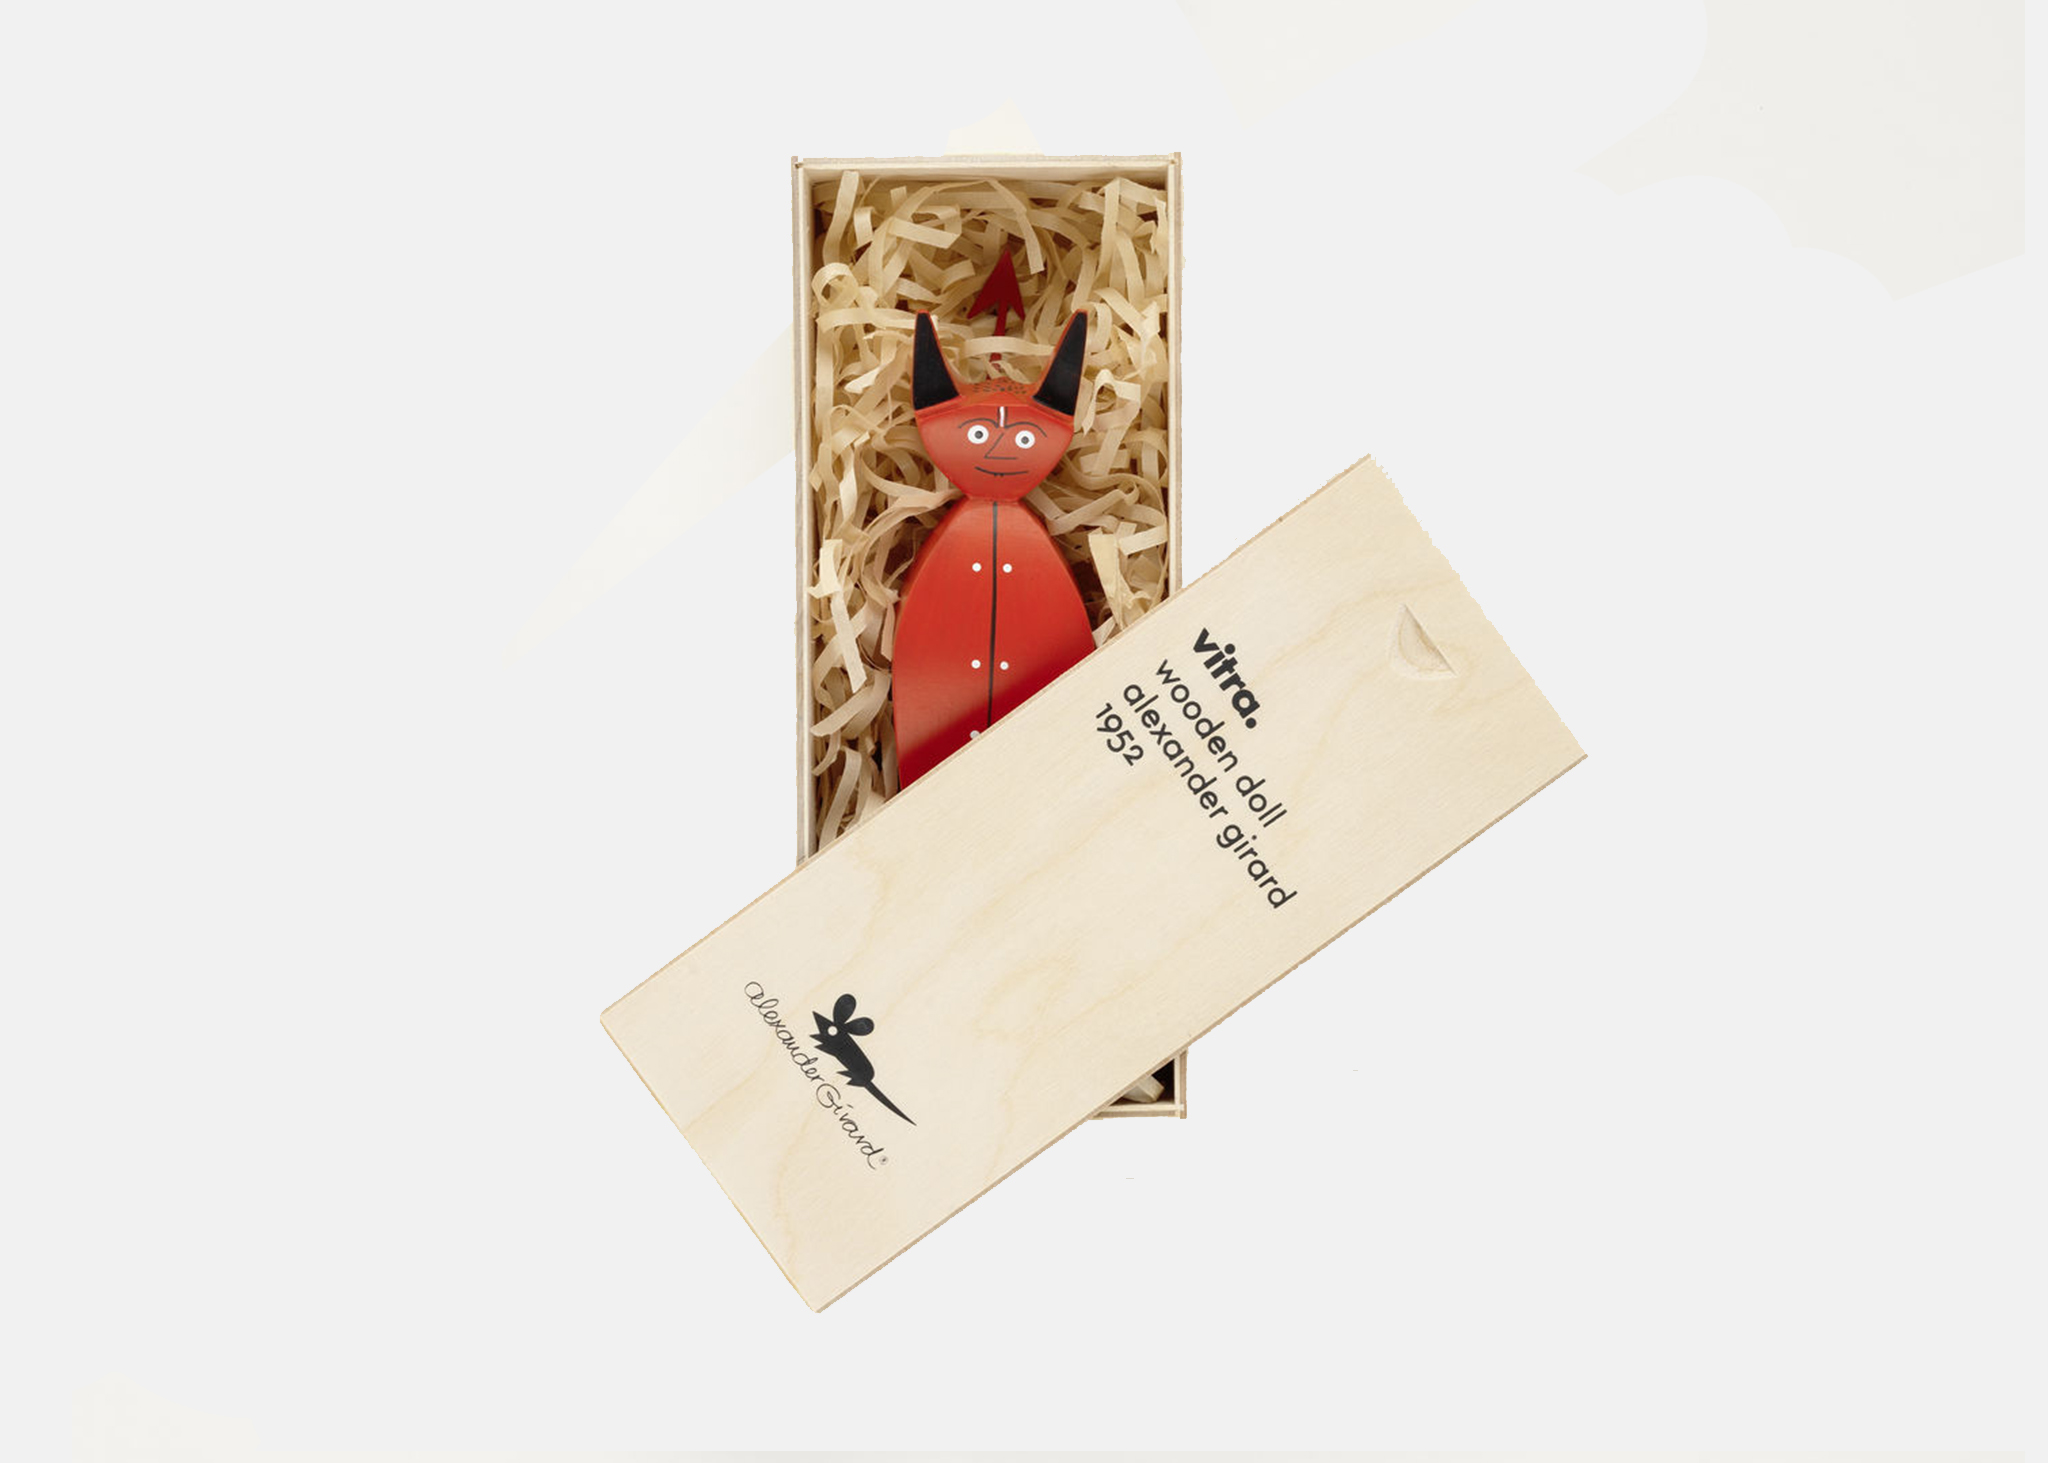 an image of a red devil figurine inside a casket